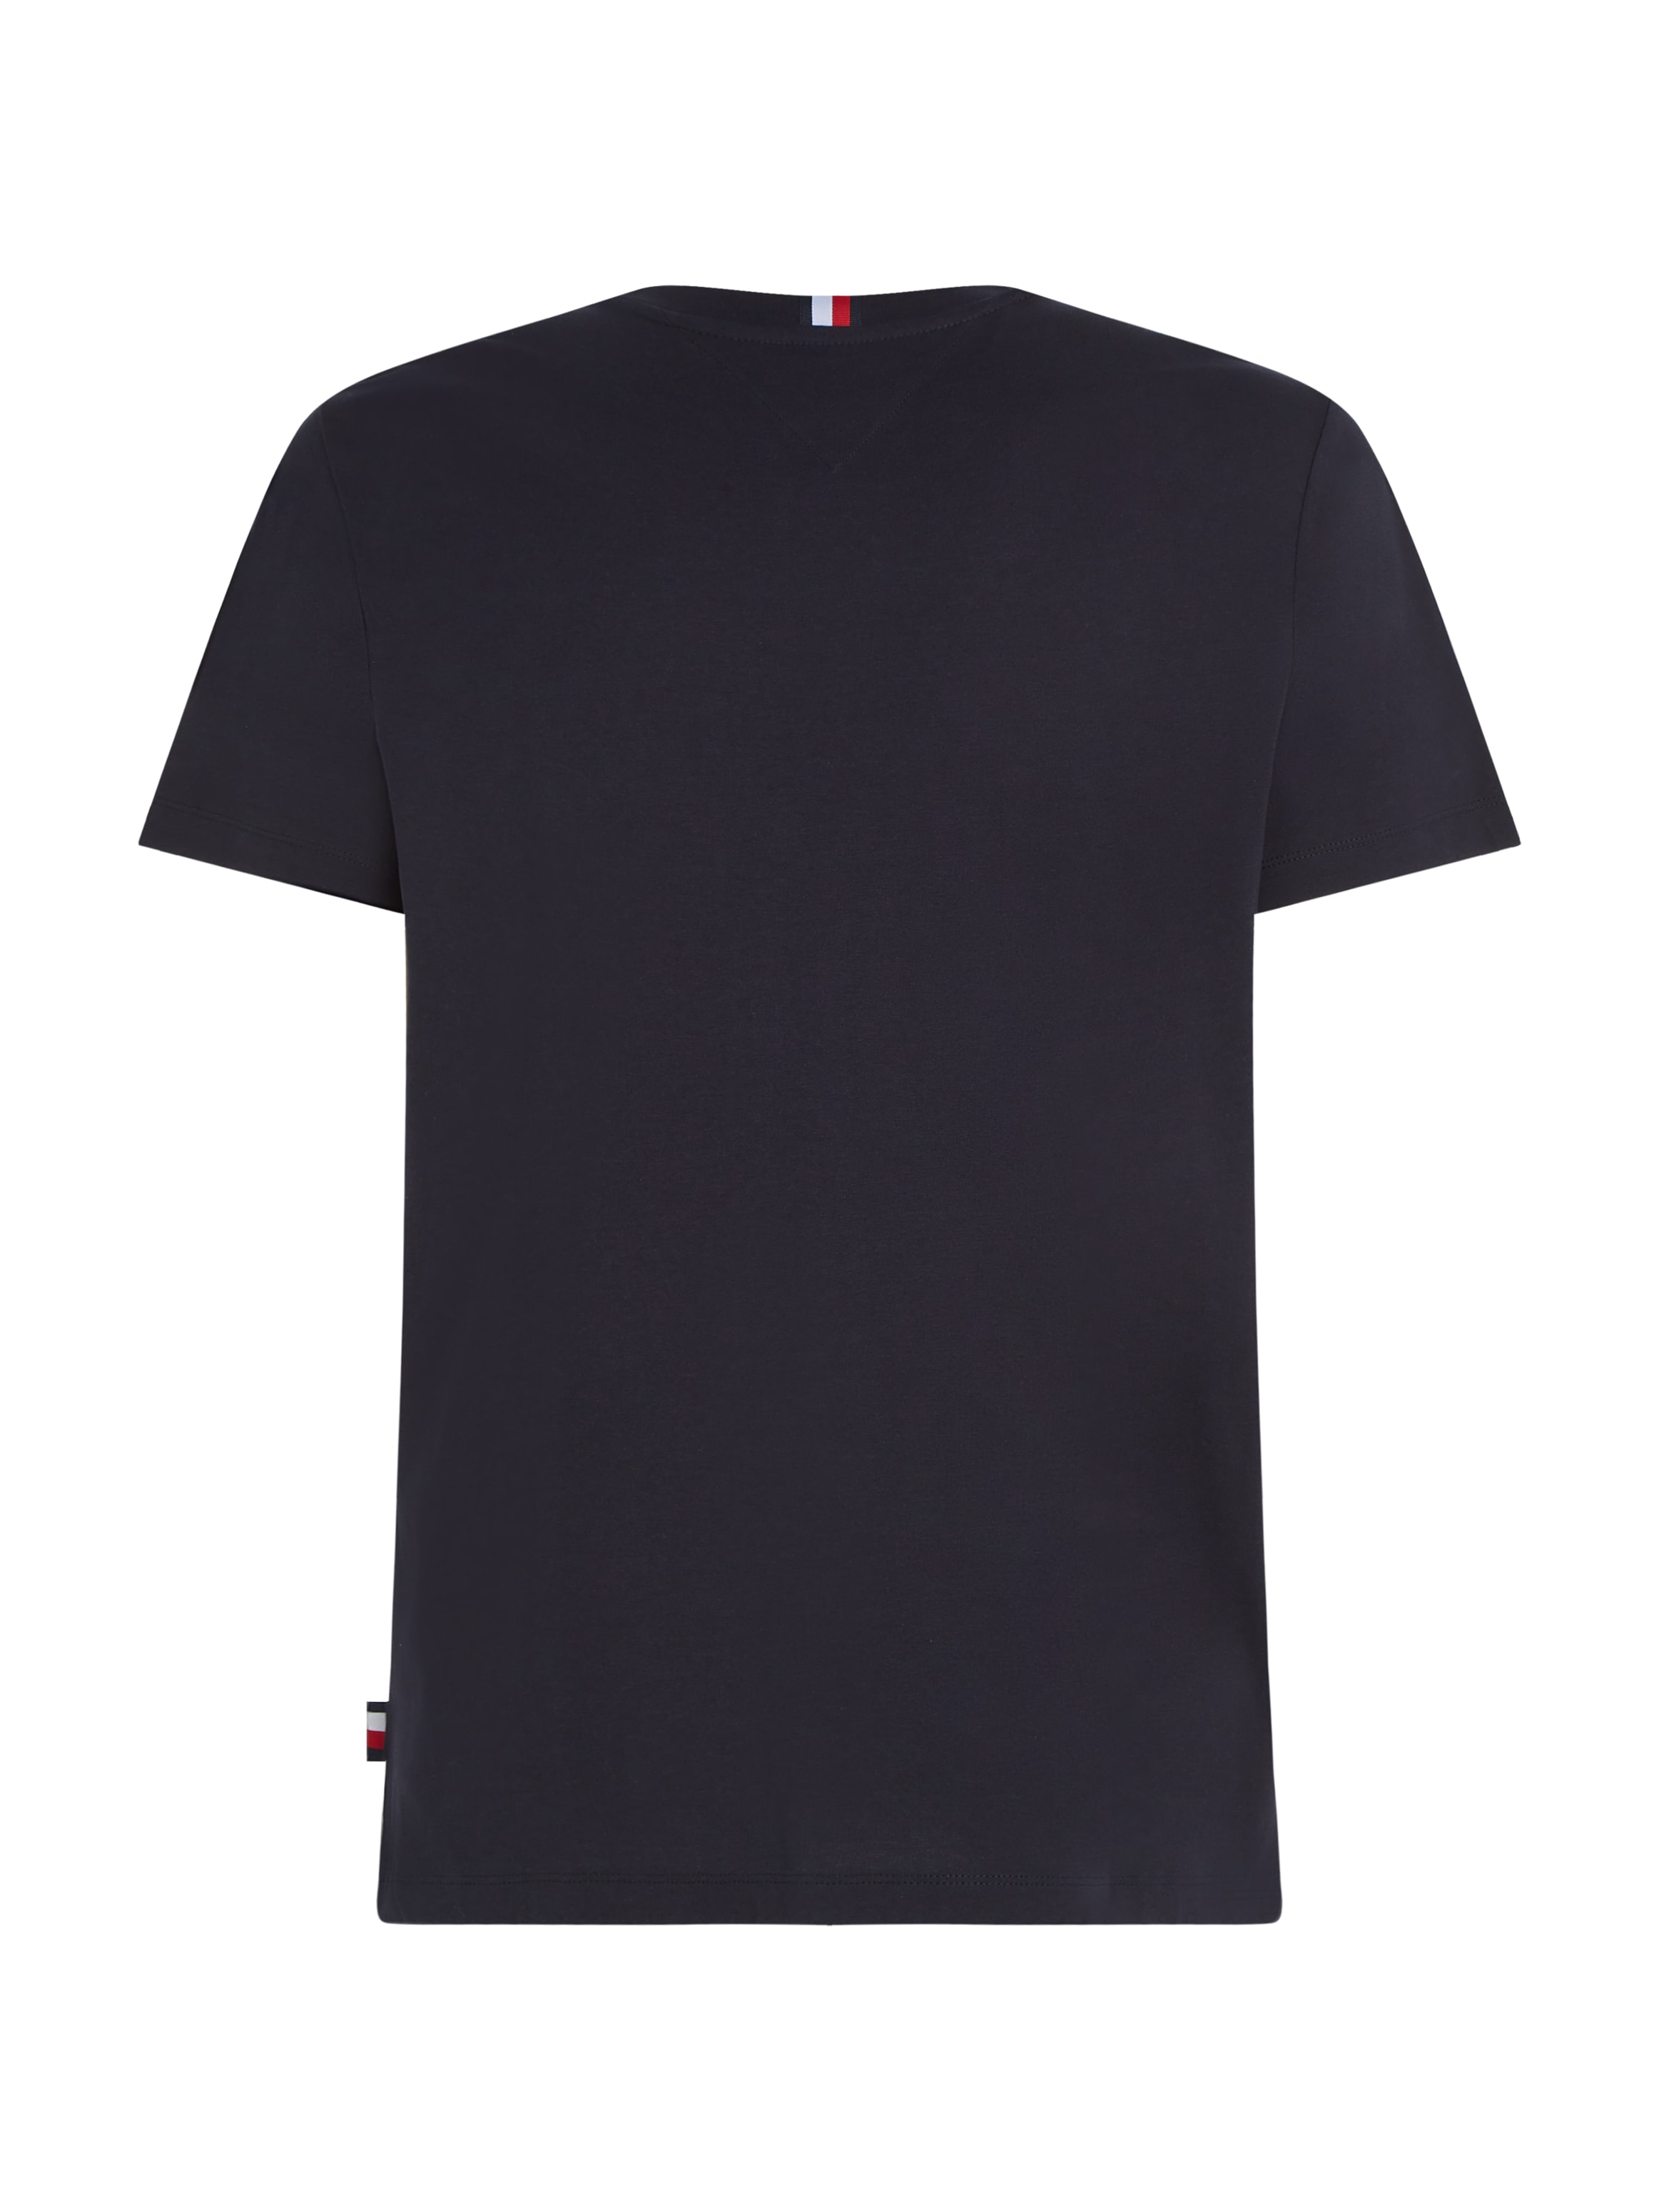 Tommy Hilfiger T-Shirt »HILFIGER 85 TEE«